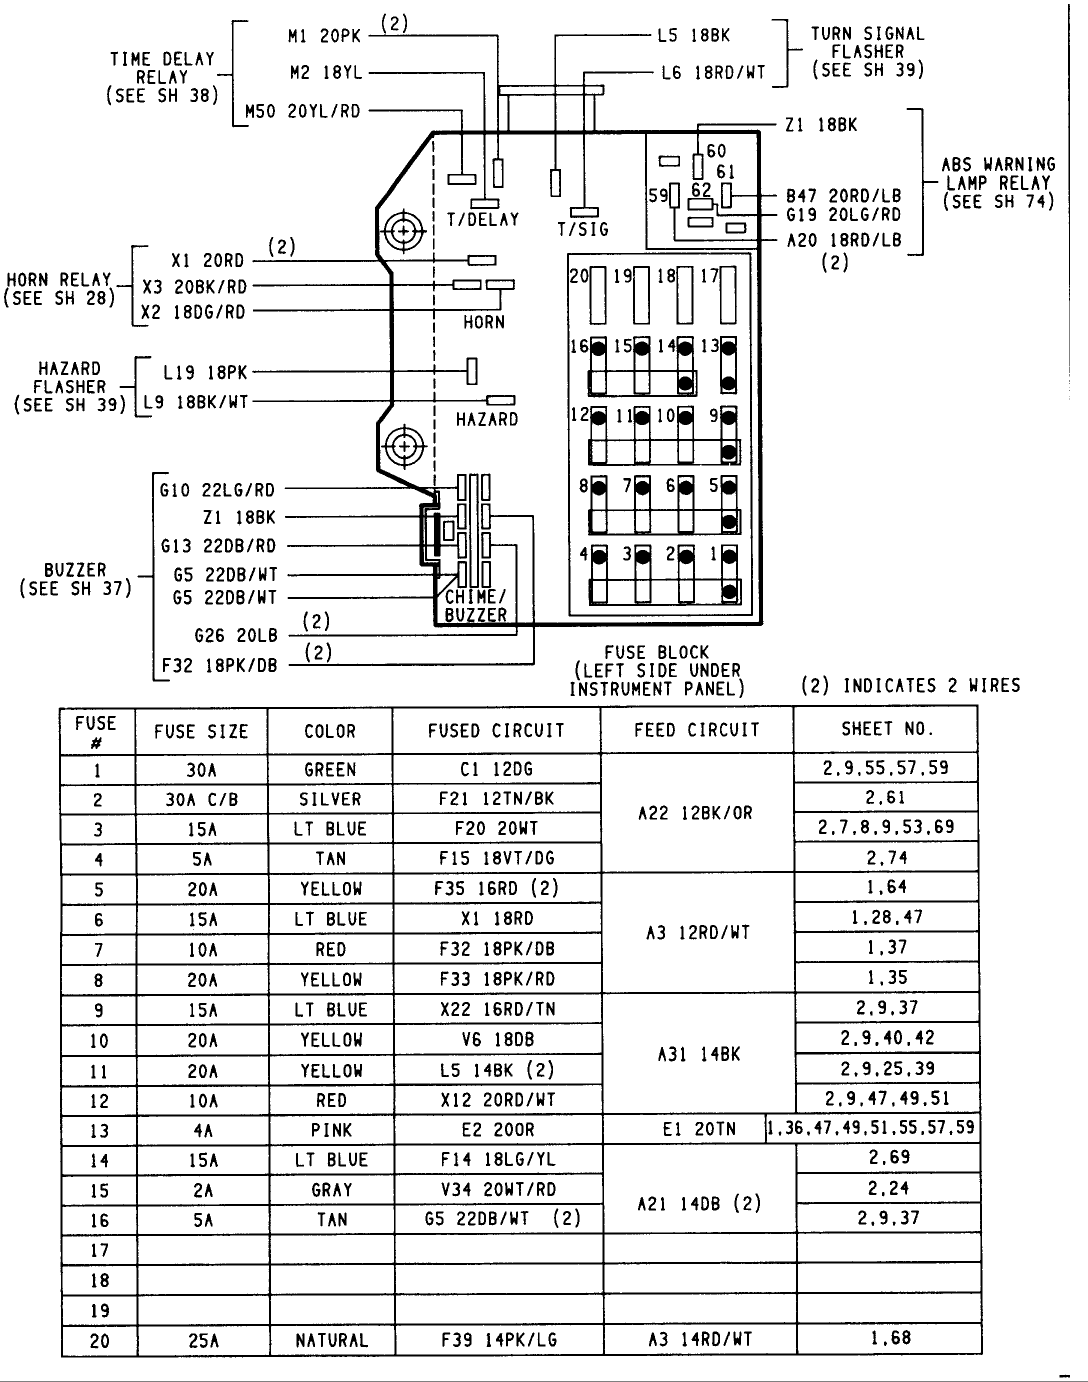 Need 1994 fuse diagram, no owners manual - DodgeForum.com 93 dakota fuse box diagram 